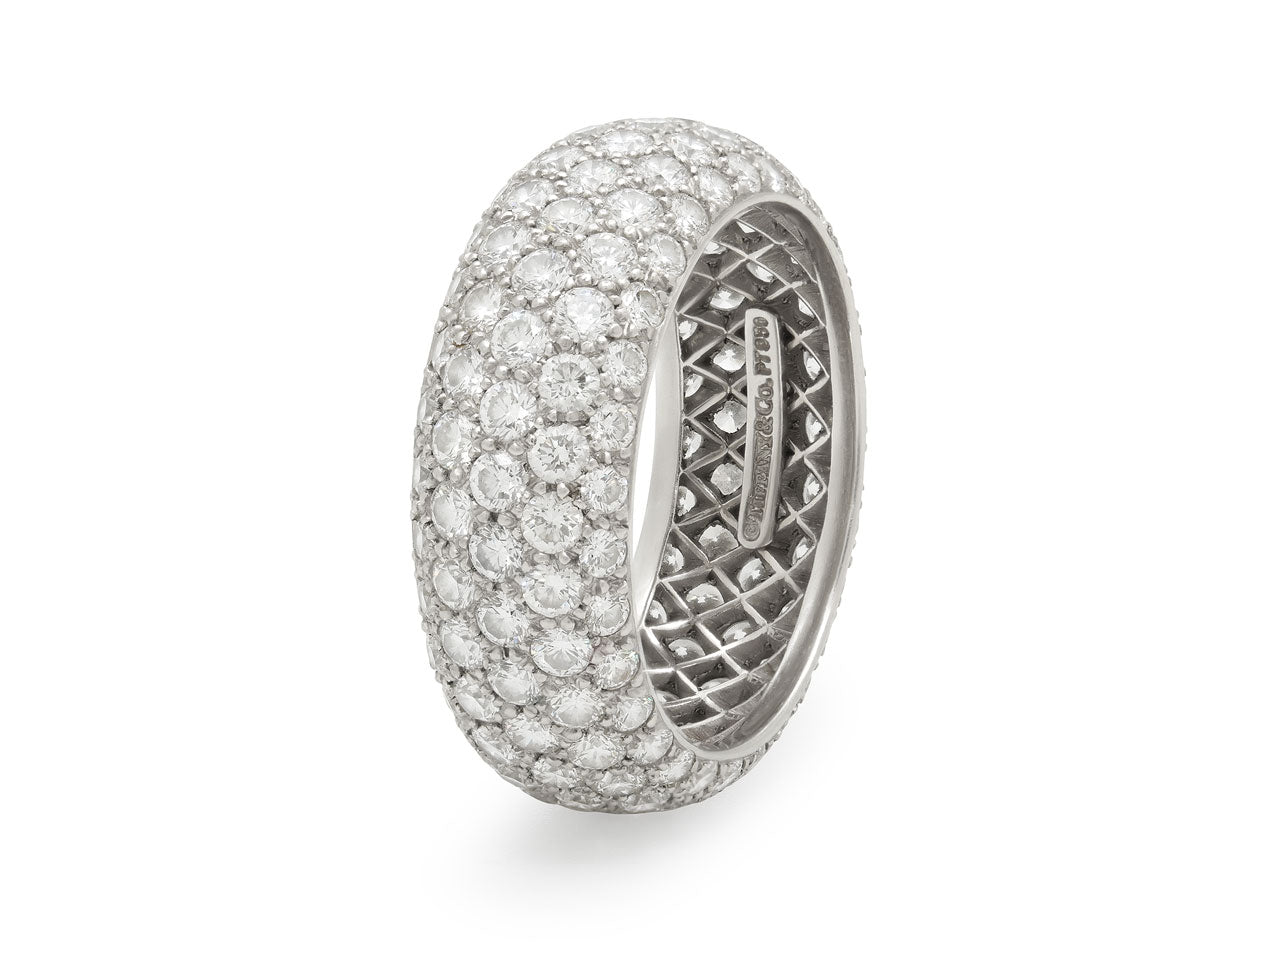 Tiffany & Co. 'Soleste' Diamond Band Ring in Platinum